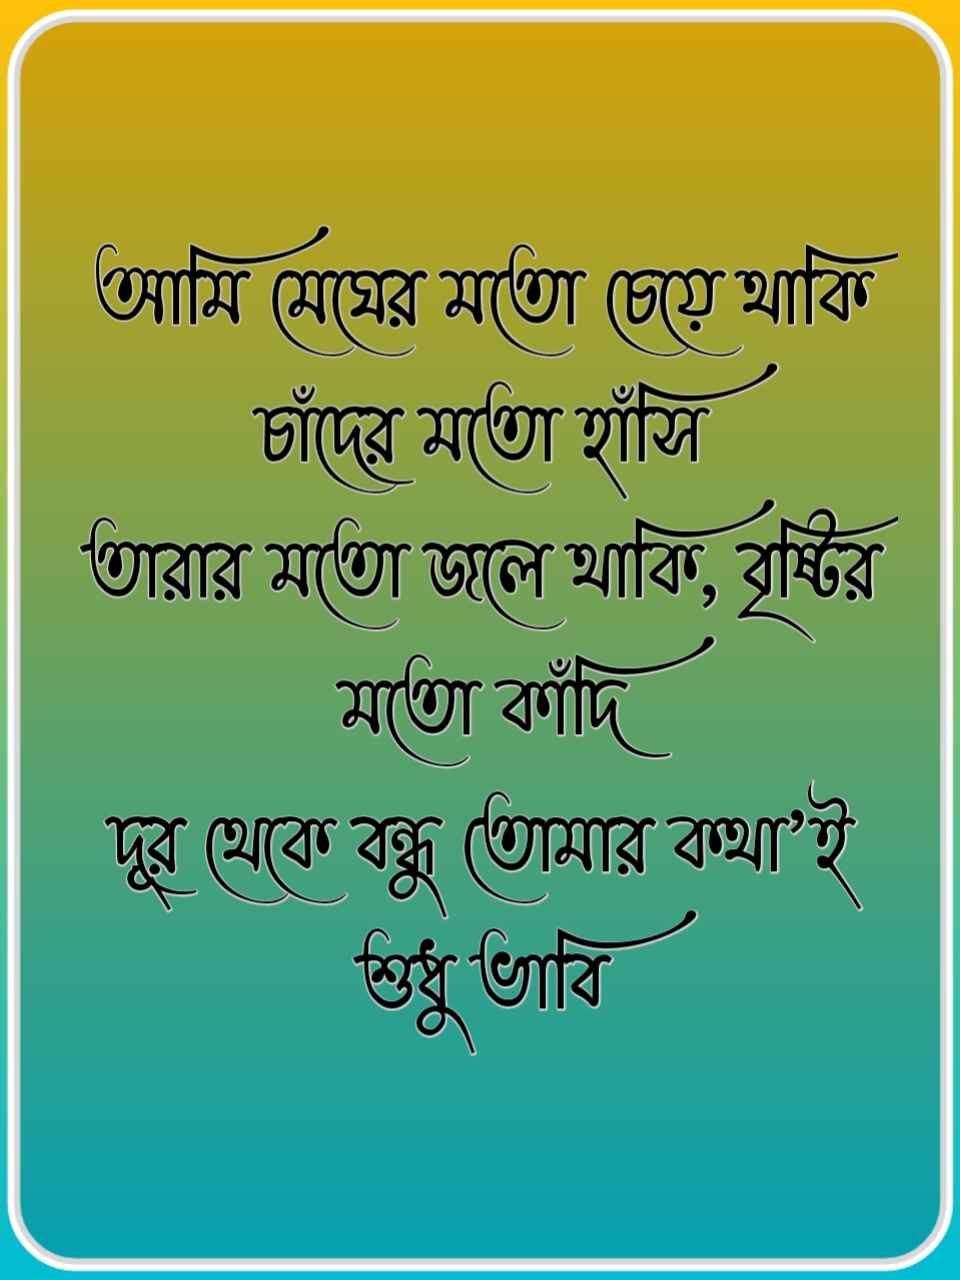 1. Bangla status love, Love caption, facebook caption, bangla chondo pic, প্রেমেরে ছন্দ, ভালোবাসার ছন্দ, ছন্দ পিক, ছন্দ লেখা ছবি